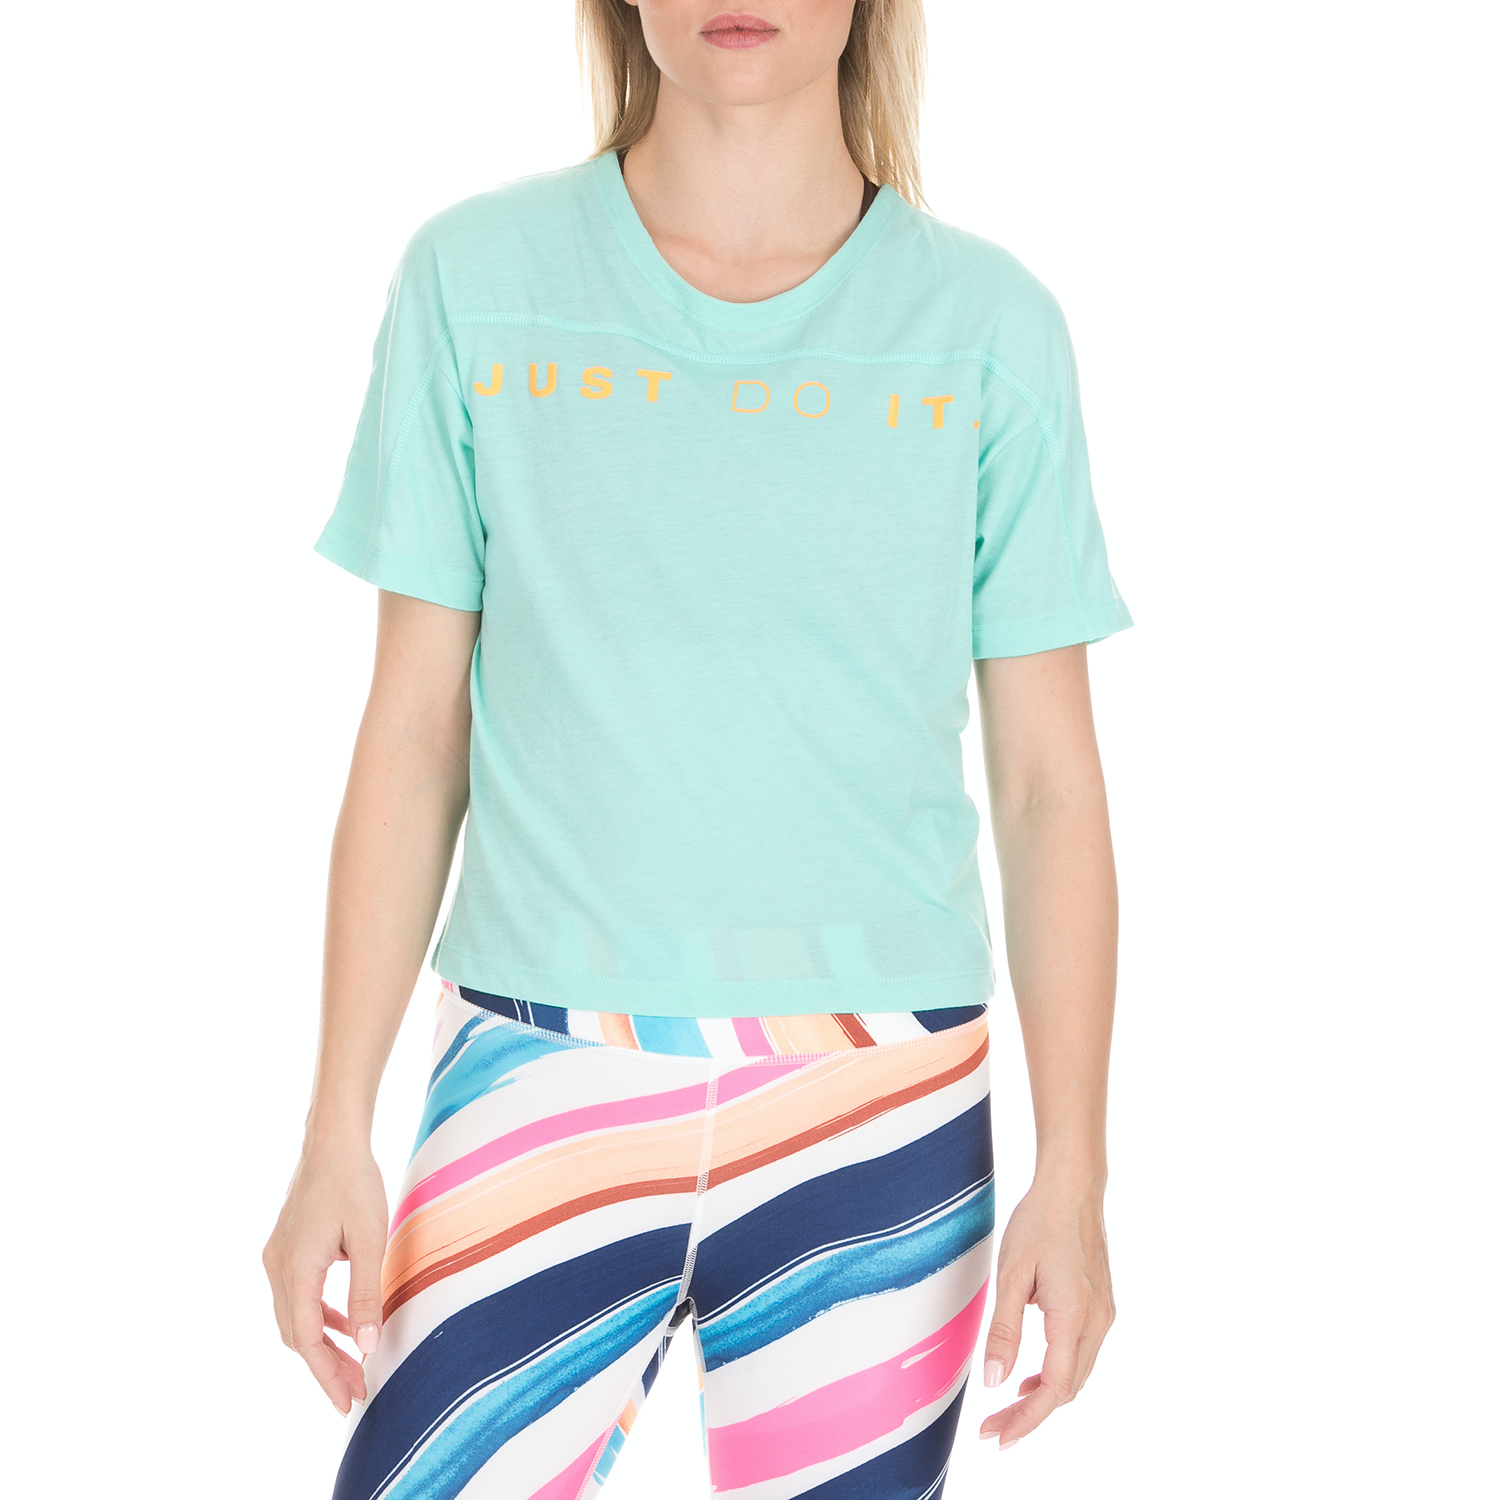 NIKE - Γυναικείο t-shirt NIKE MILER SURF μπλε Γυναικεία/Ρούχα/Αθλητικά/T-shirt-Τοπ